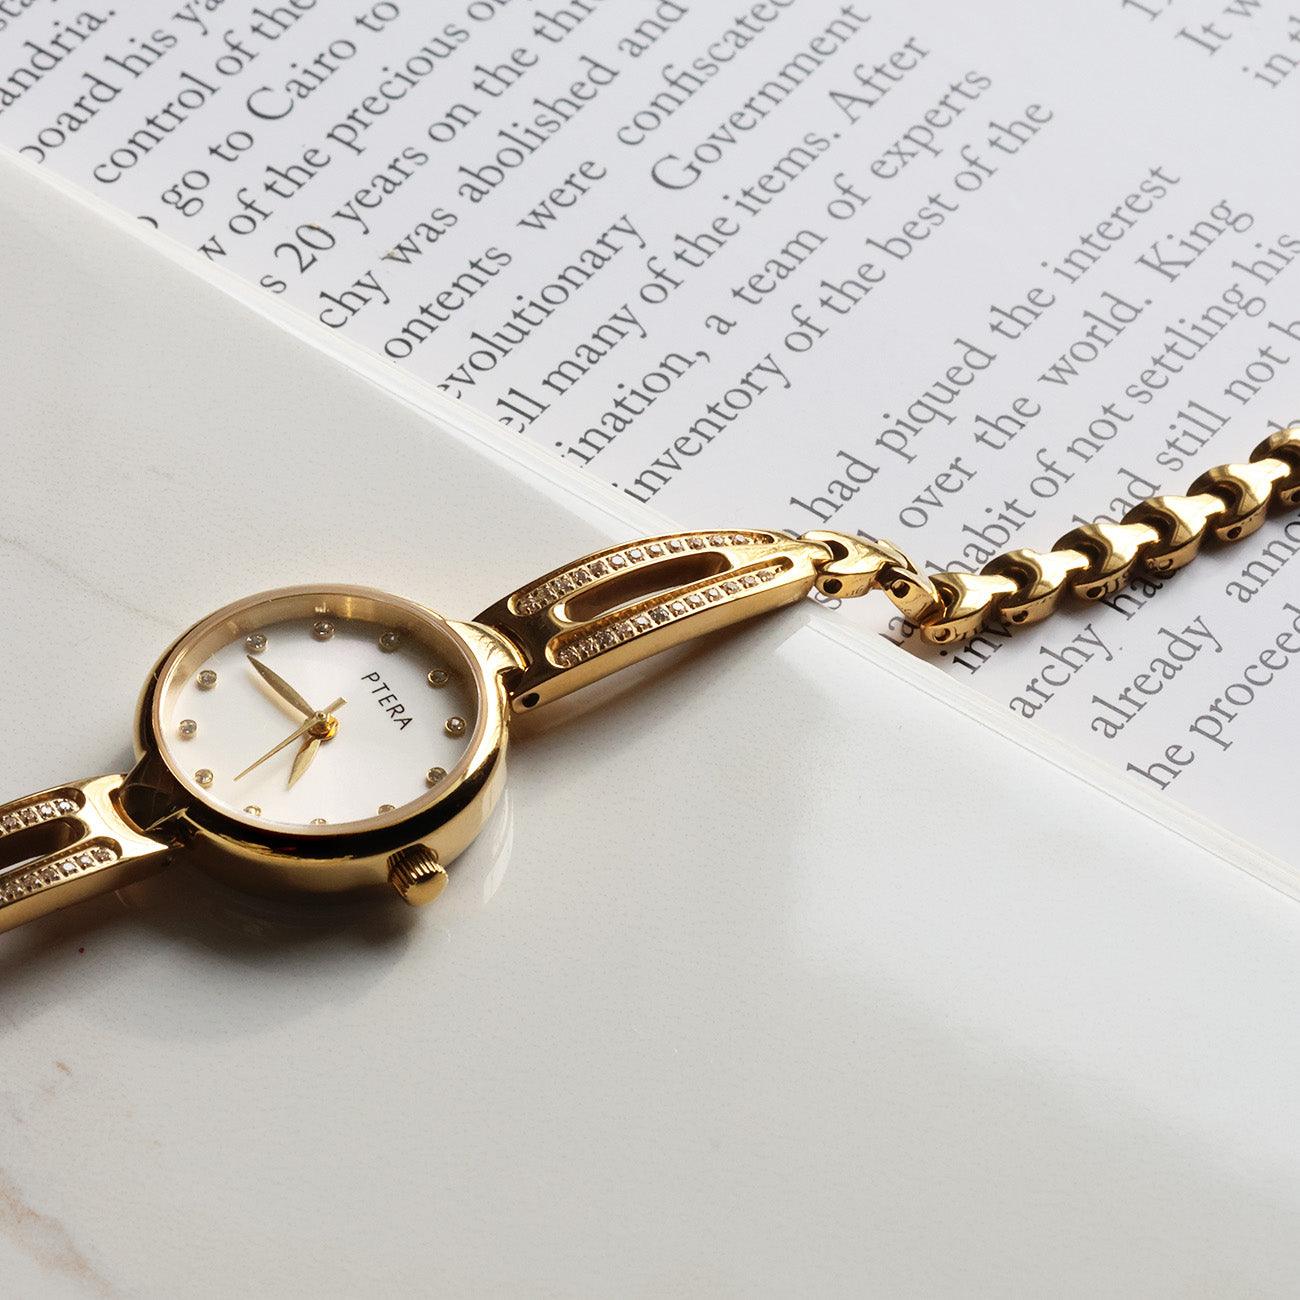 Gold Tone Nightingale Watch - Ptera Jewelry